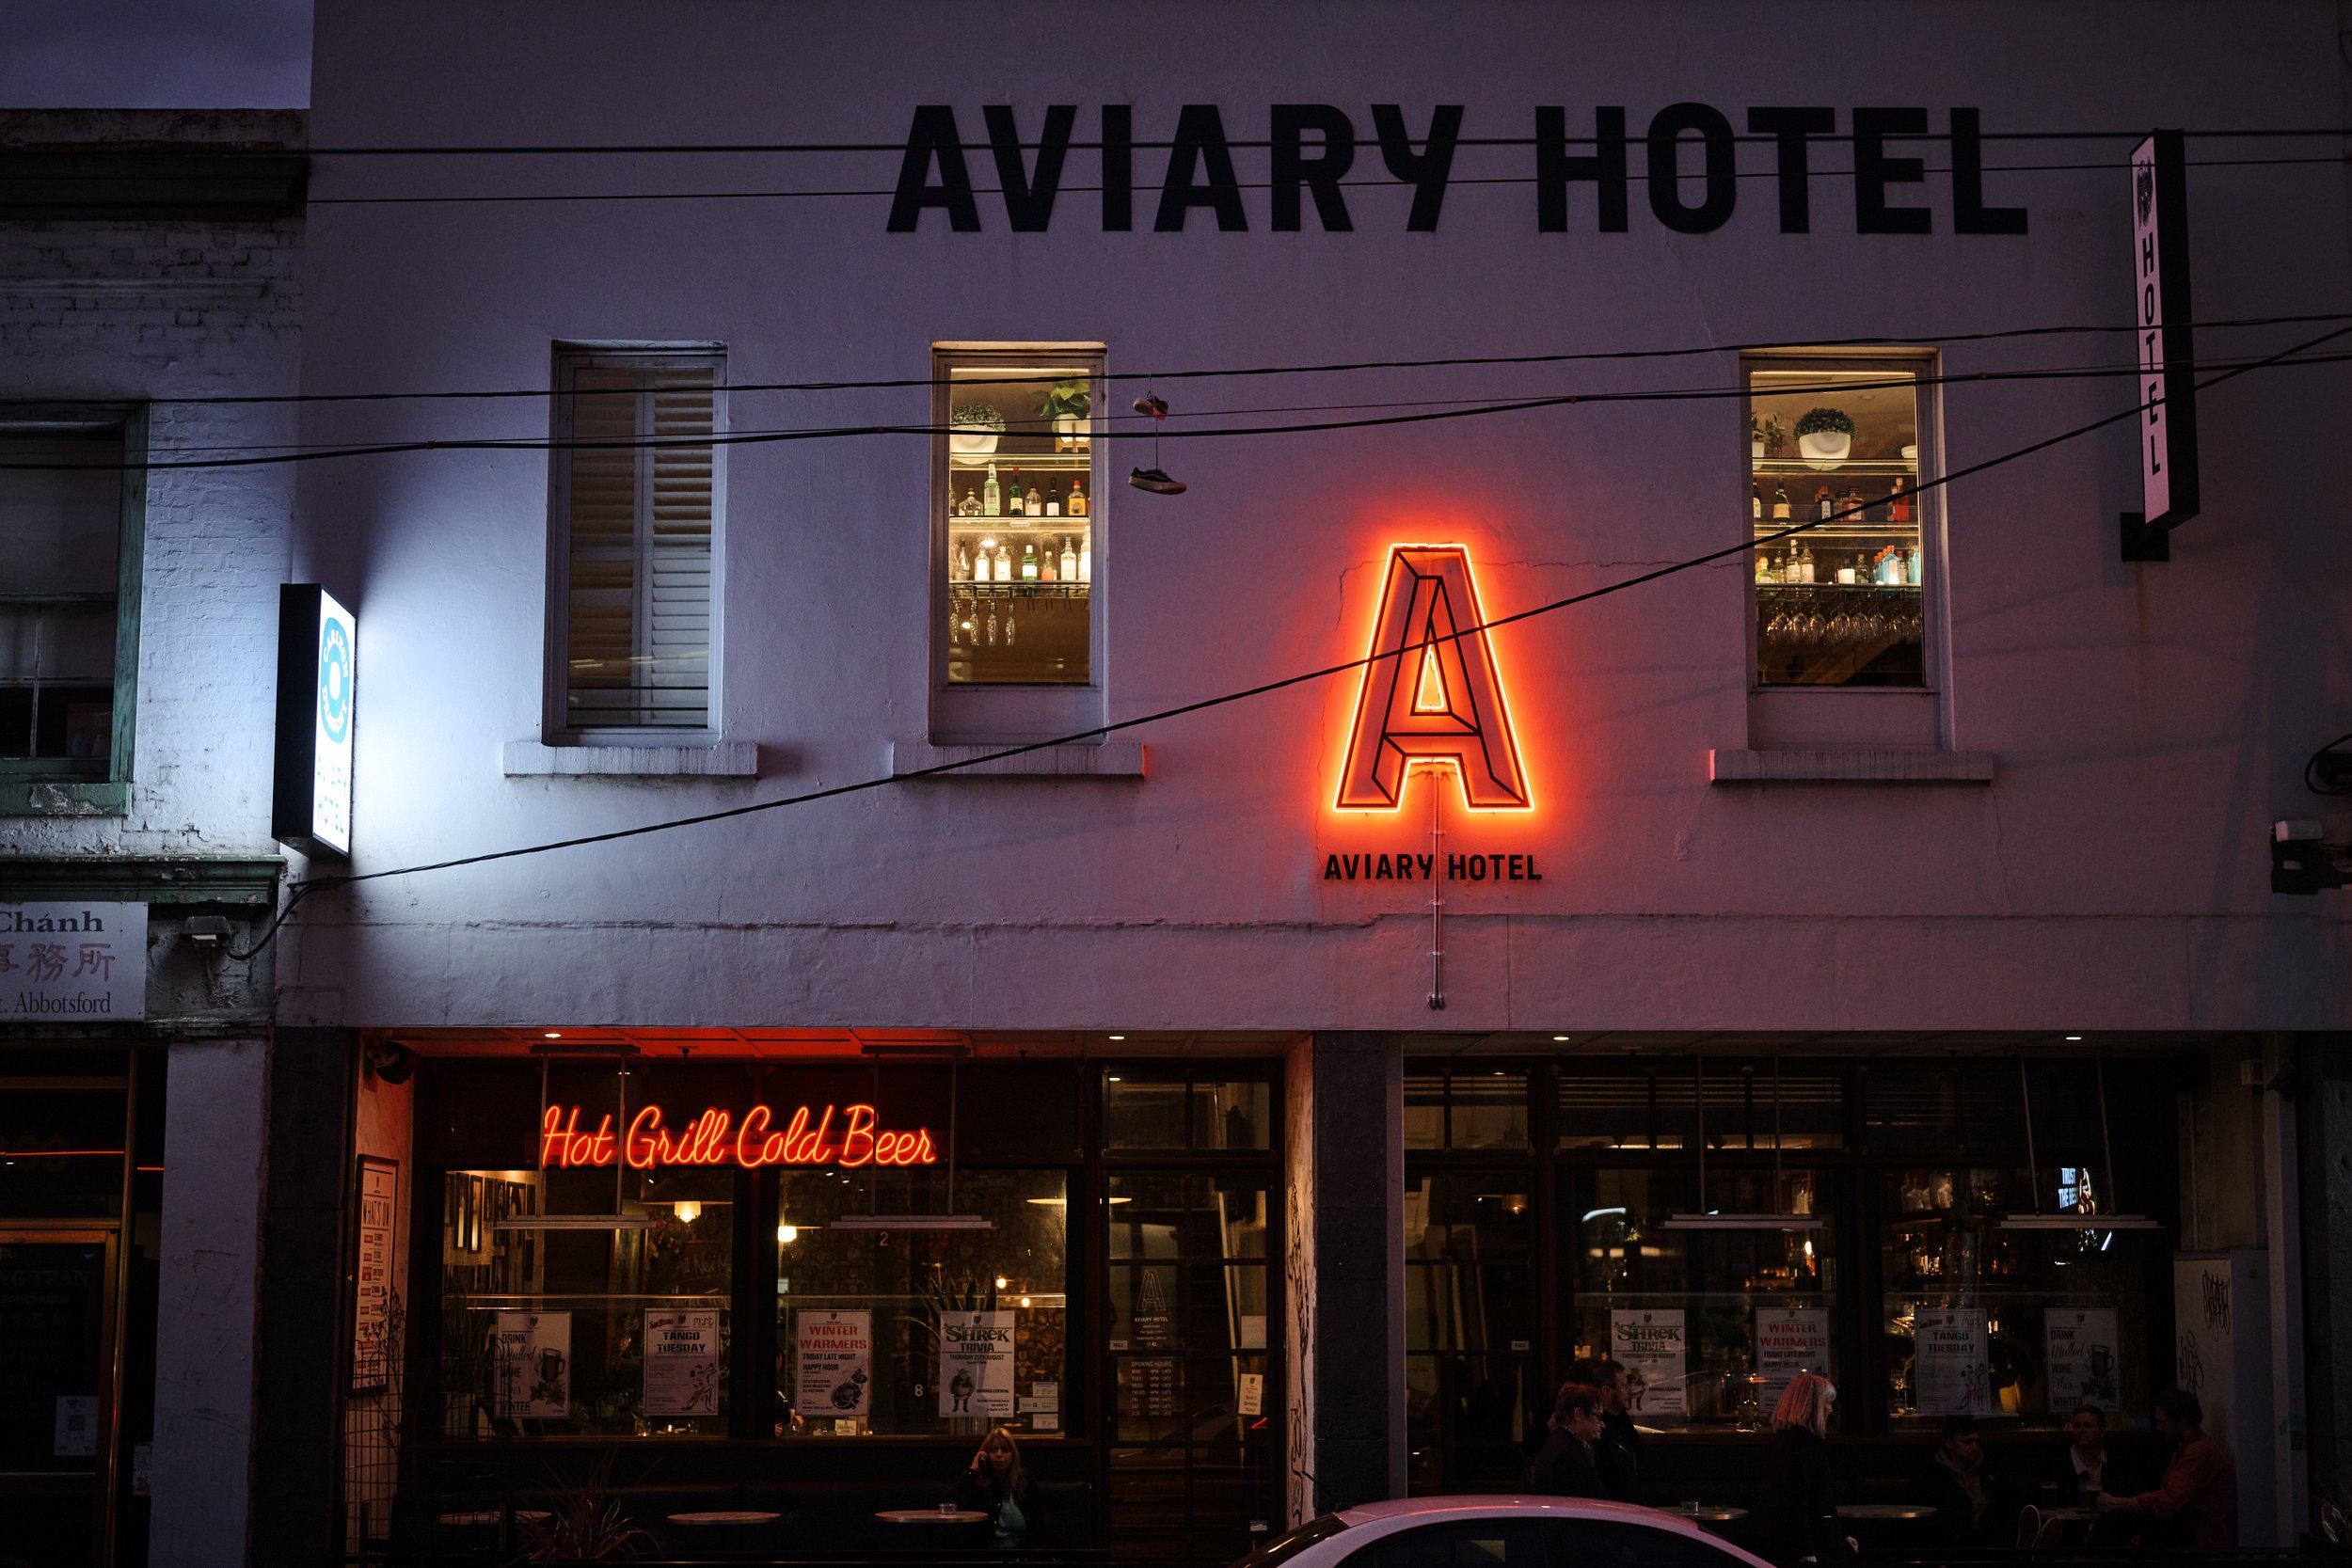 Aviary Hotel - Serv Agency - Longboy Media 4 (7).jpg